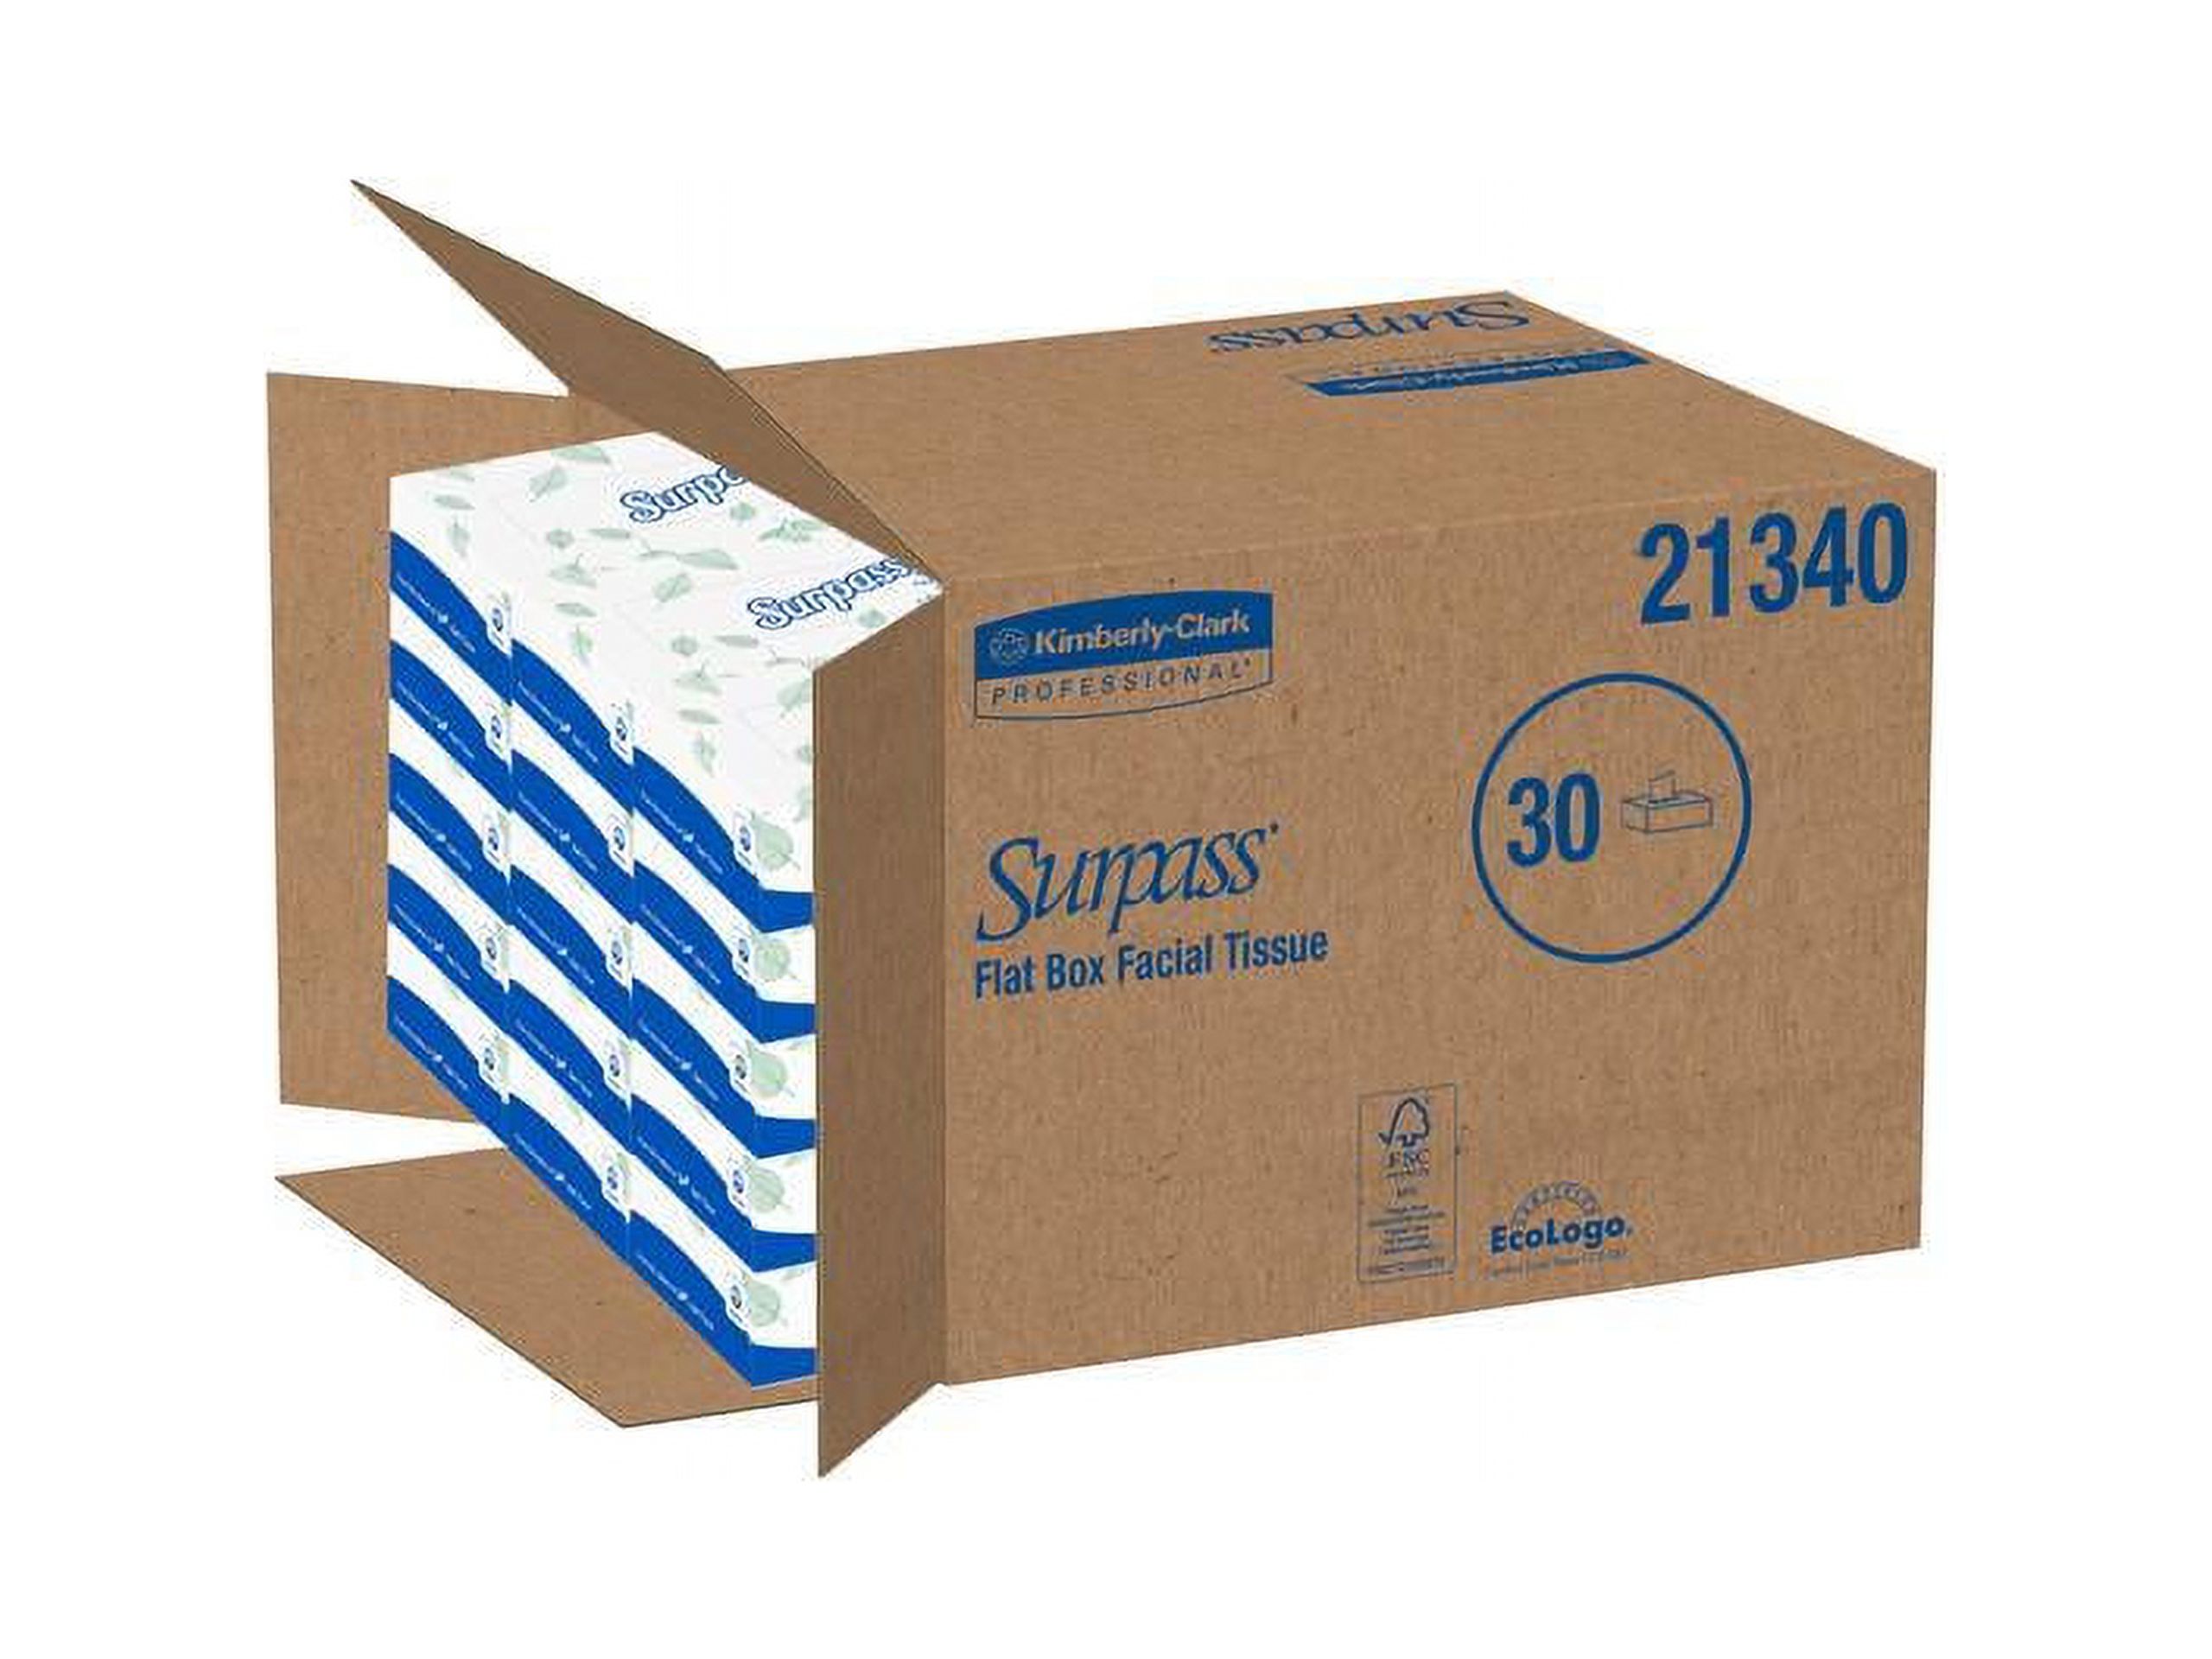 Surpass Facial Tissue, 2-Ply, White, Flat Box, 100 Sheets/Box, 30 Boxes/Carton -KCC21340 - image 5 of 5